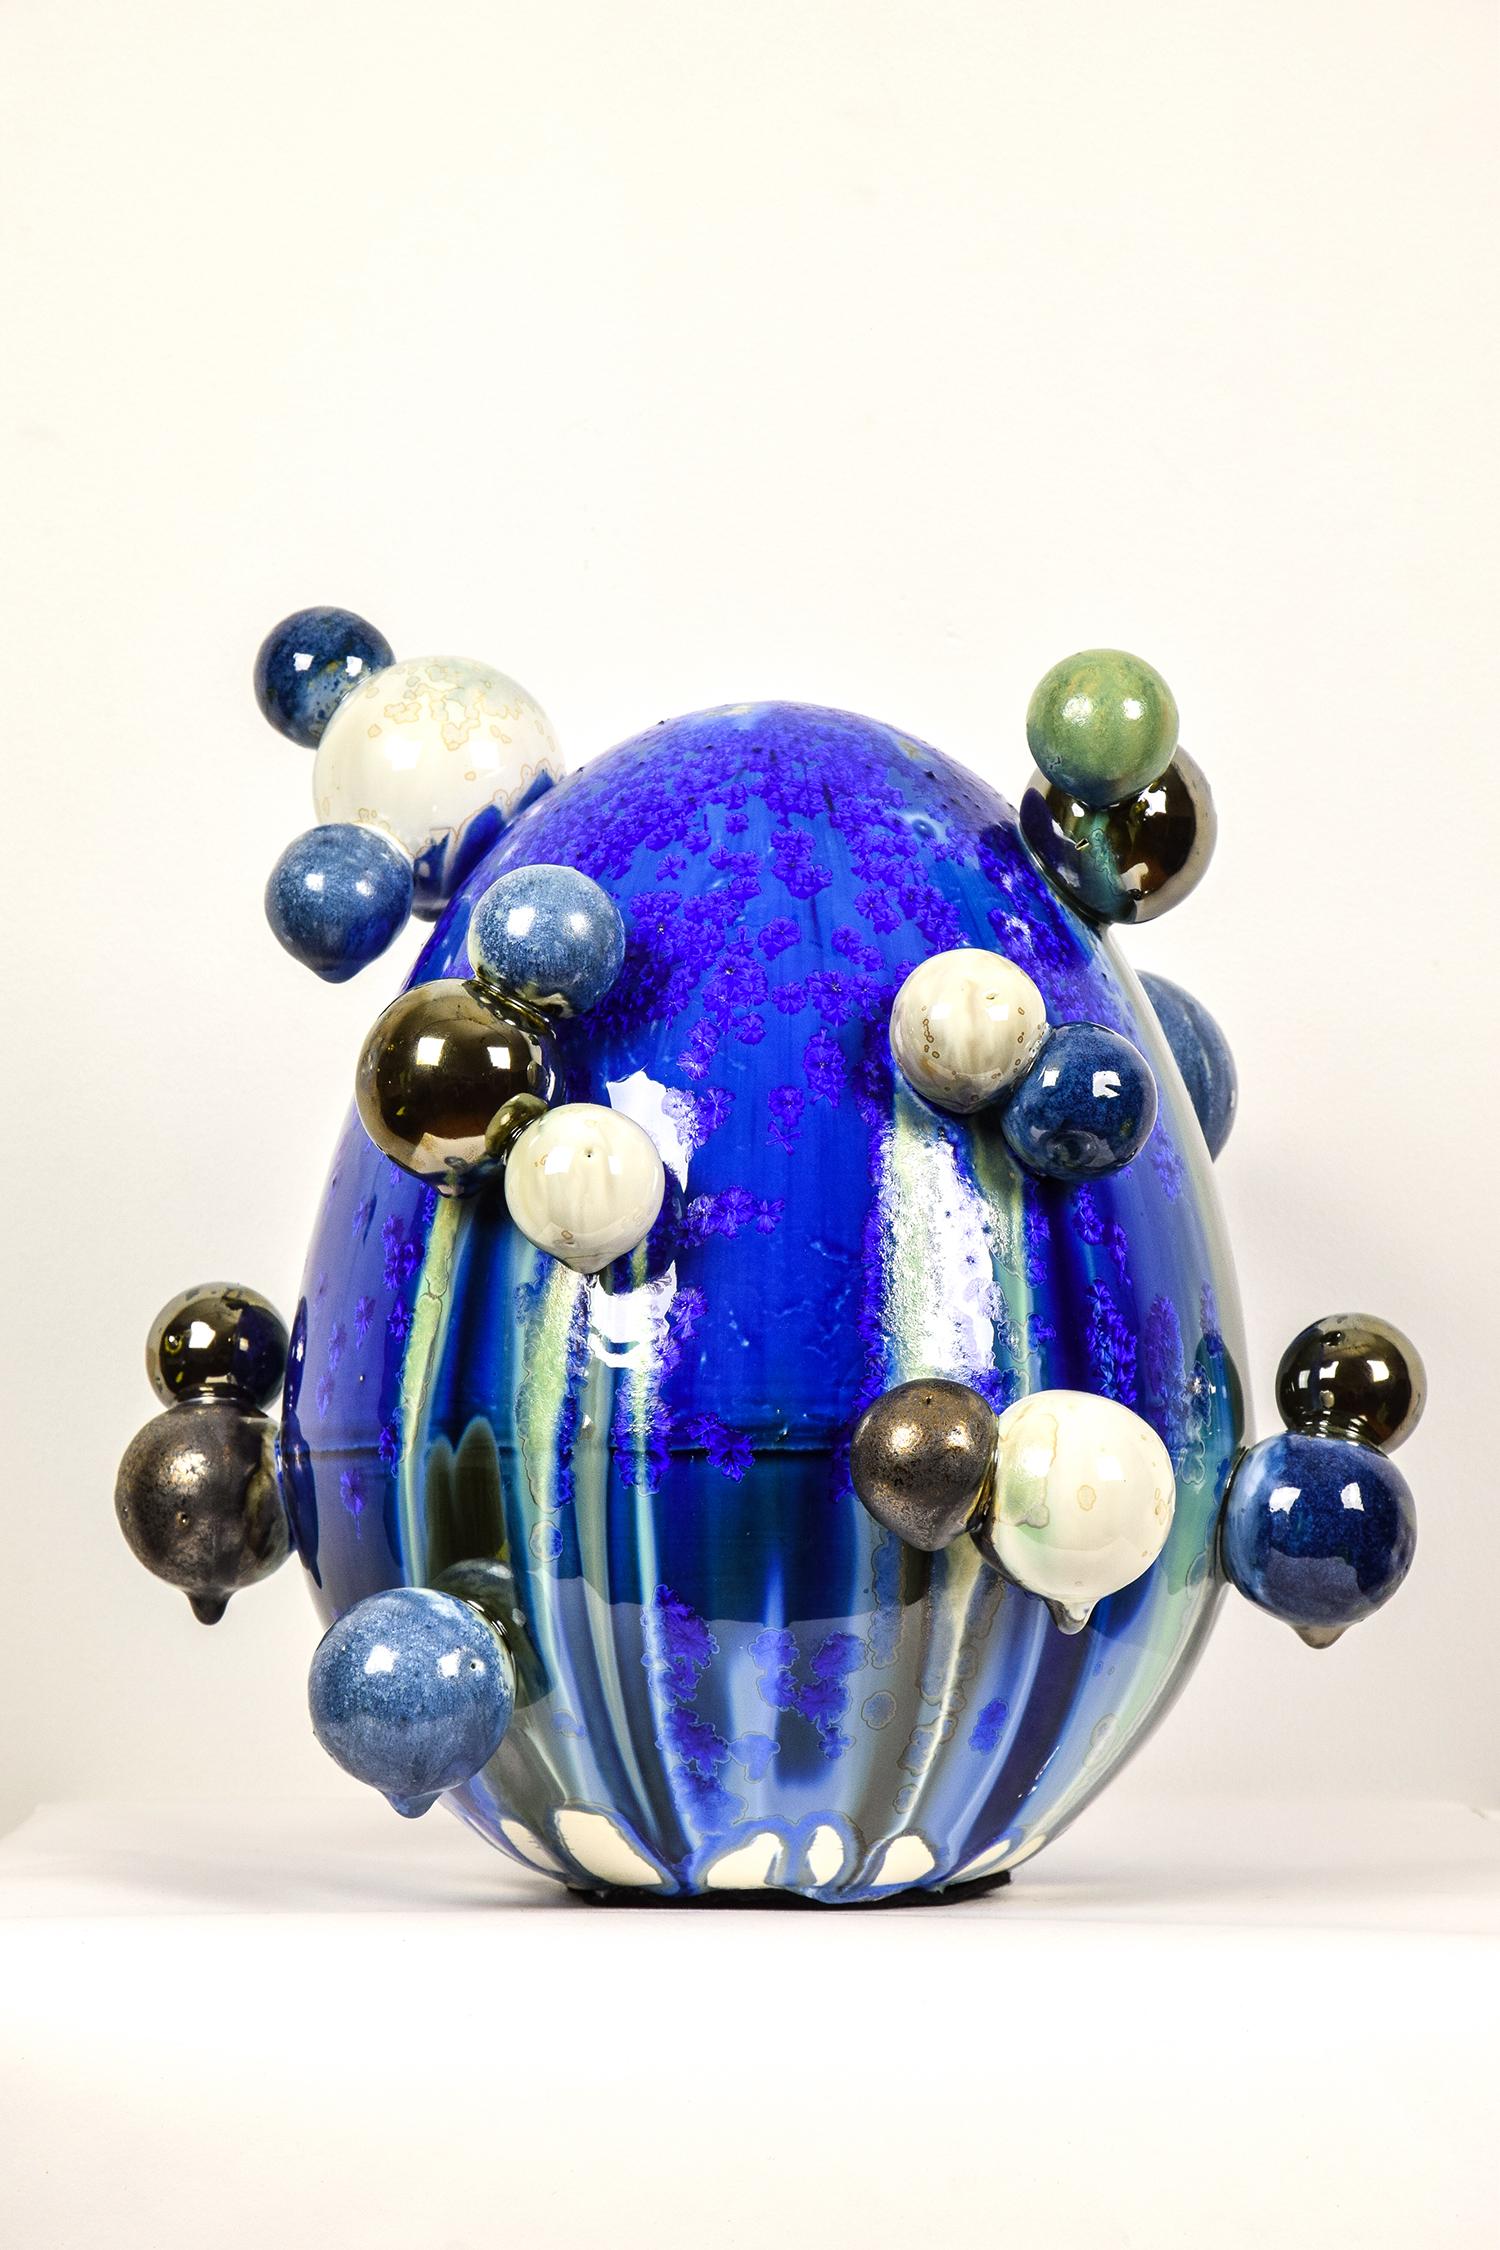 Nam Tran Abstract Sculpture - Atomic Egg by NAM TRAN - Unique Hand-Made Sculpture, Blue Egg, Porcelain Art